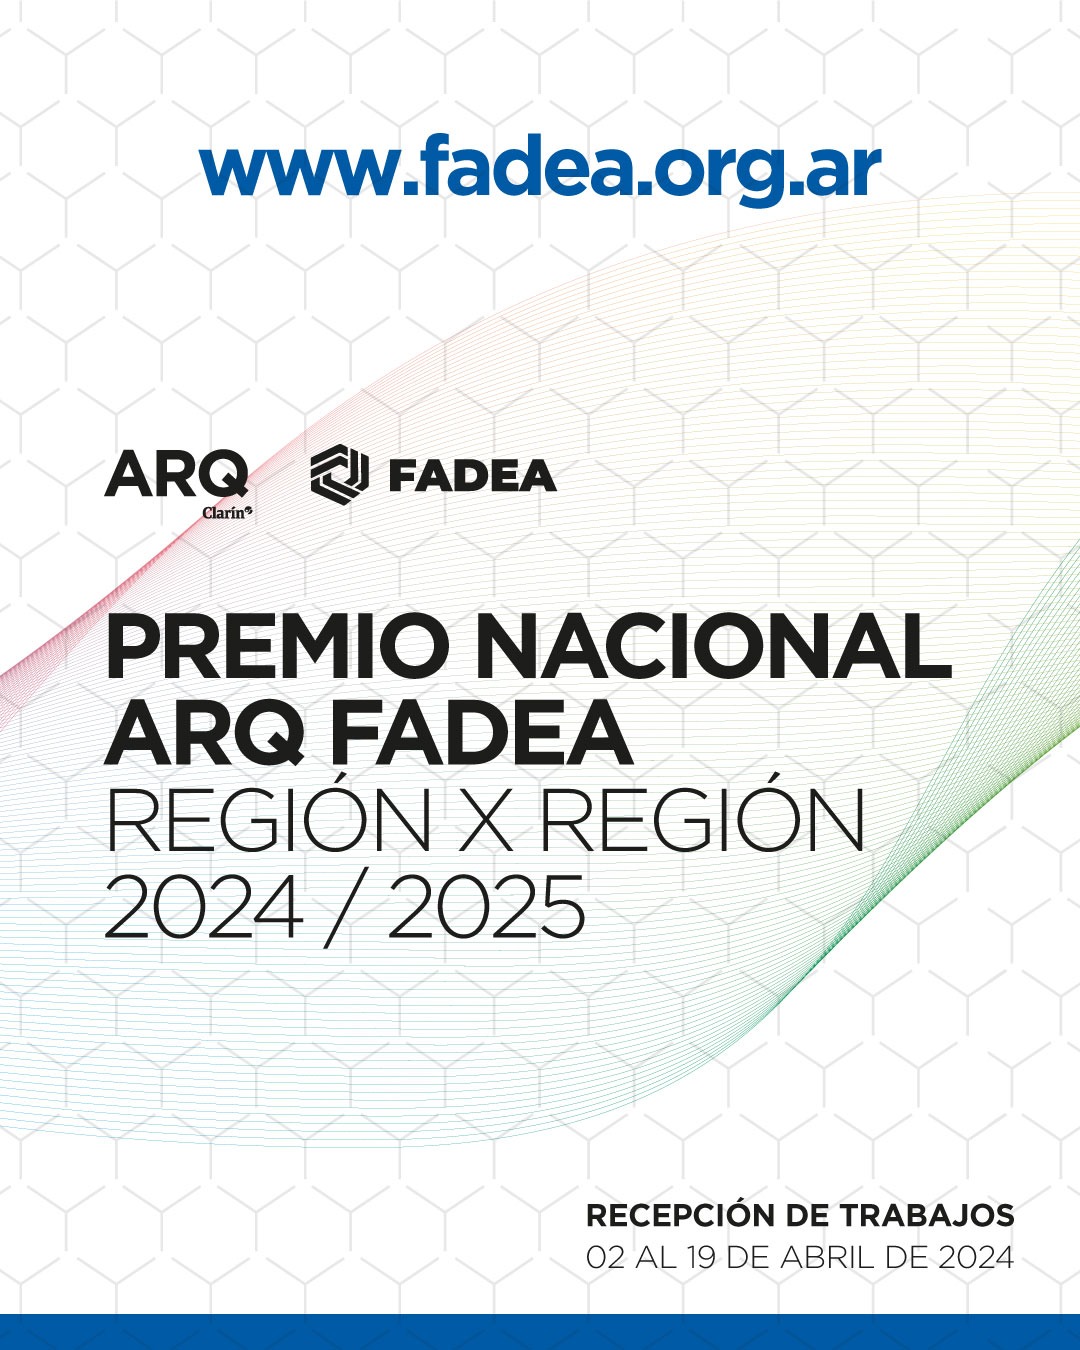 PREMIO NACIONAL ARQ FADEA 2024/2025